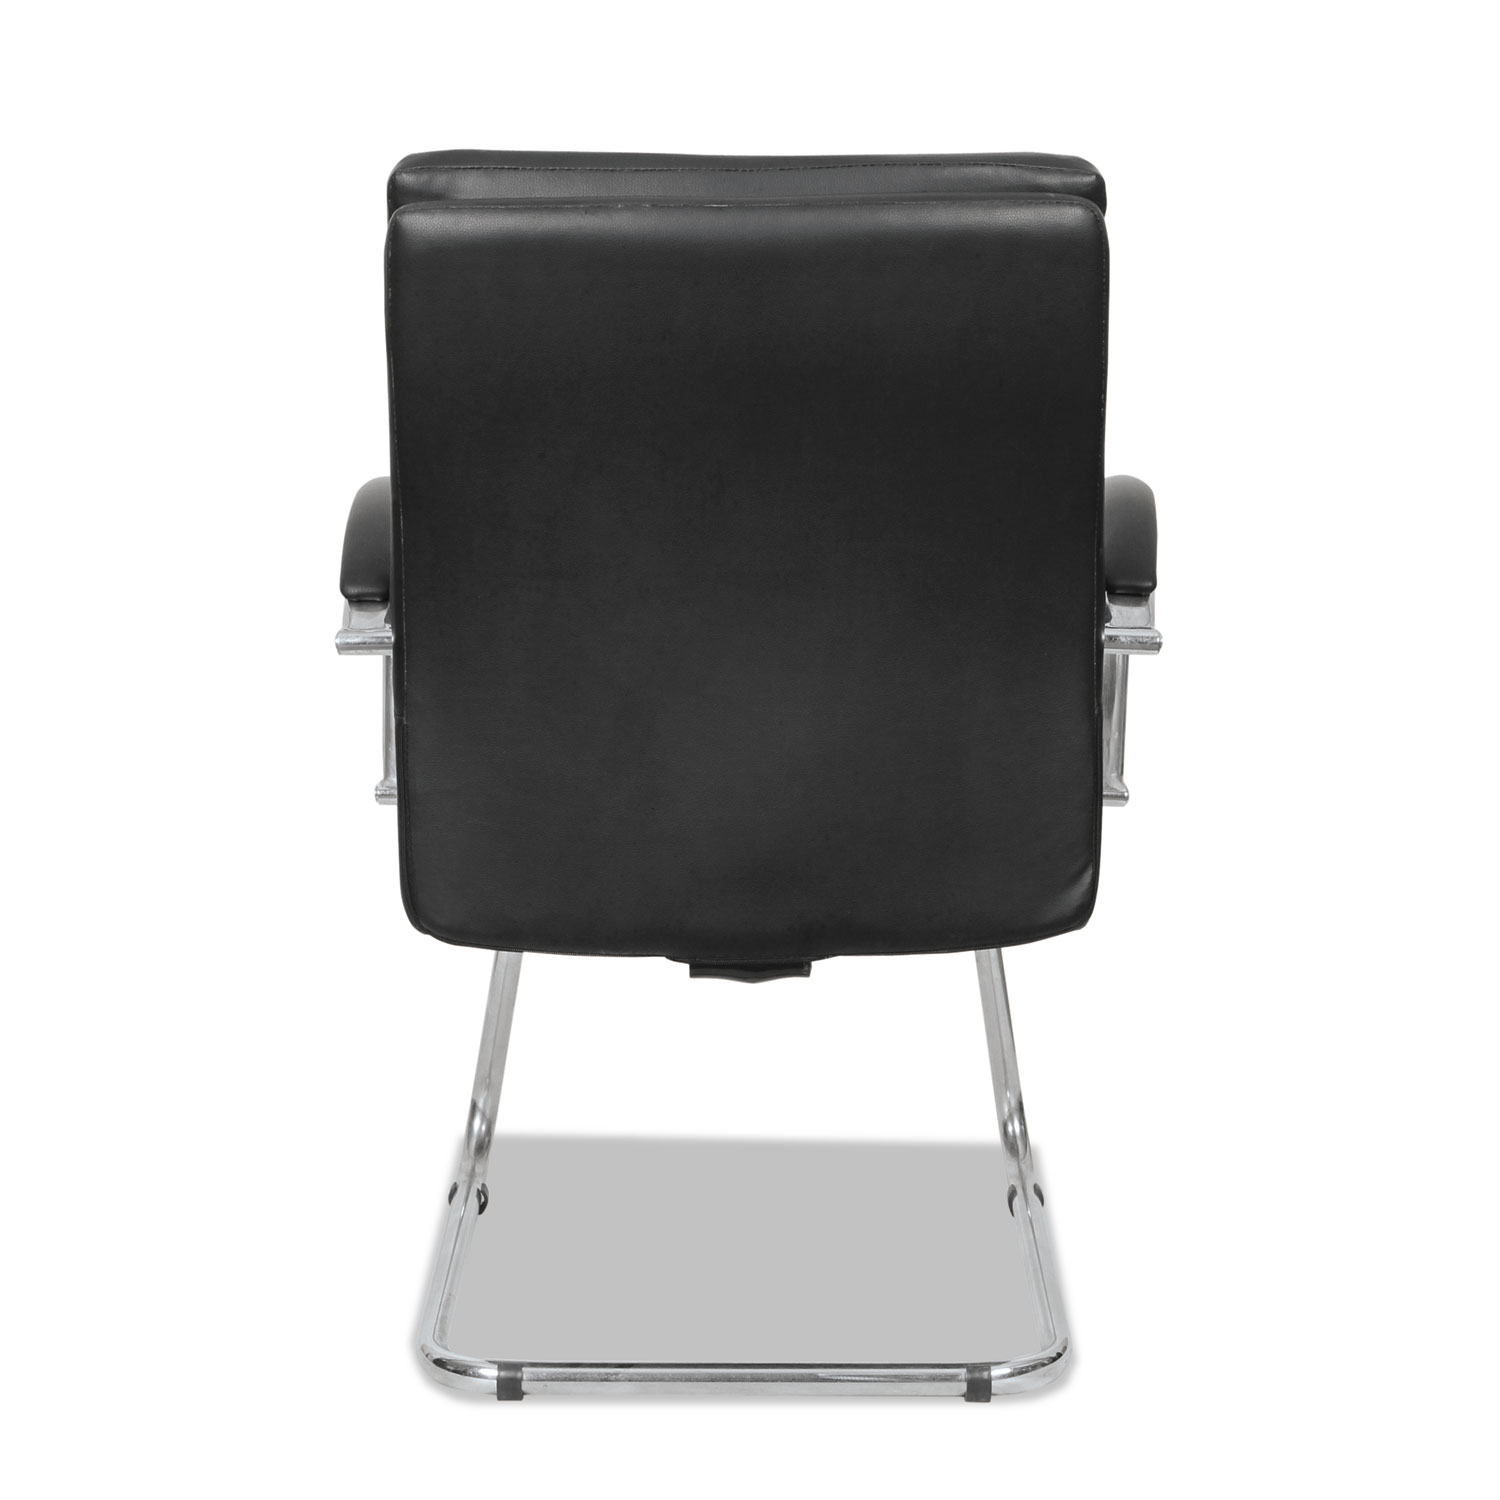 Alera Neratoli Series Slim Profile Guest Chair, Black Soft Leather, Chrome Frame